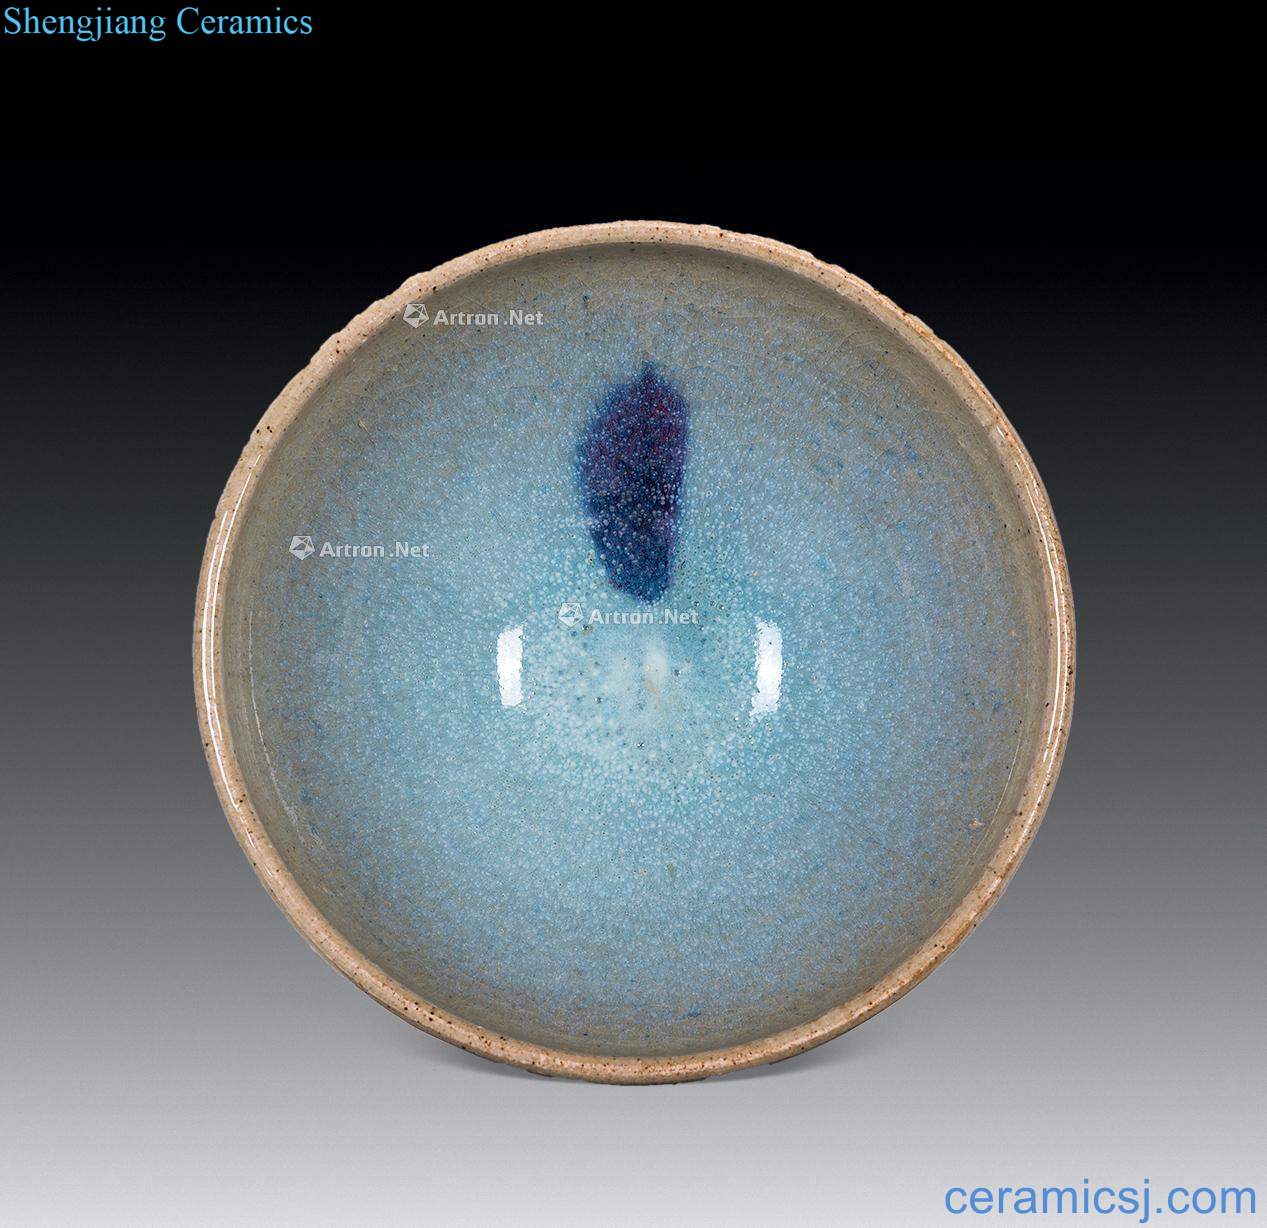 yuan Jun glaze purple bowl